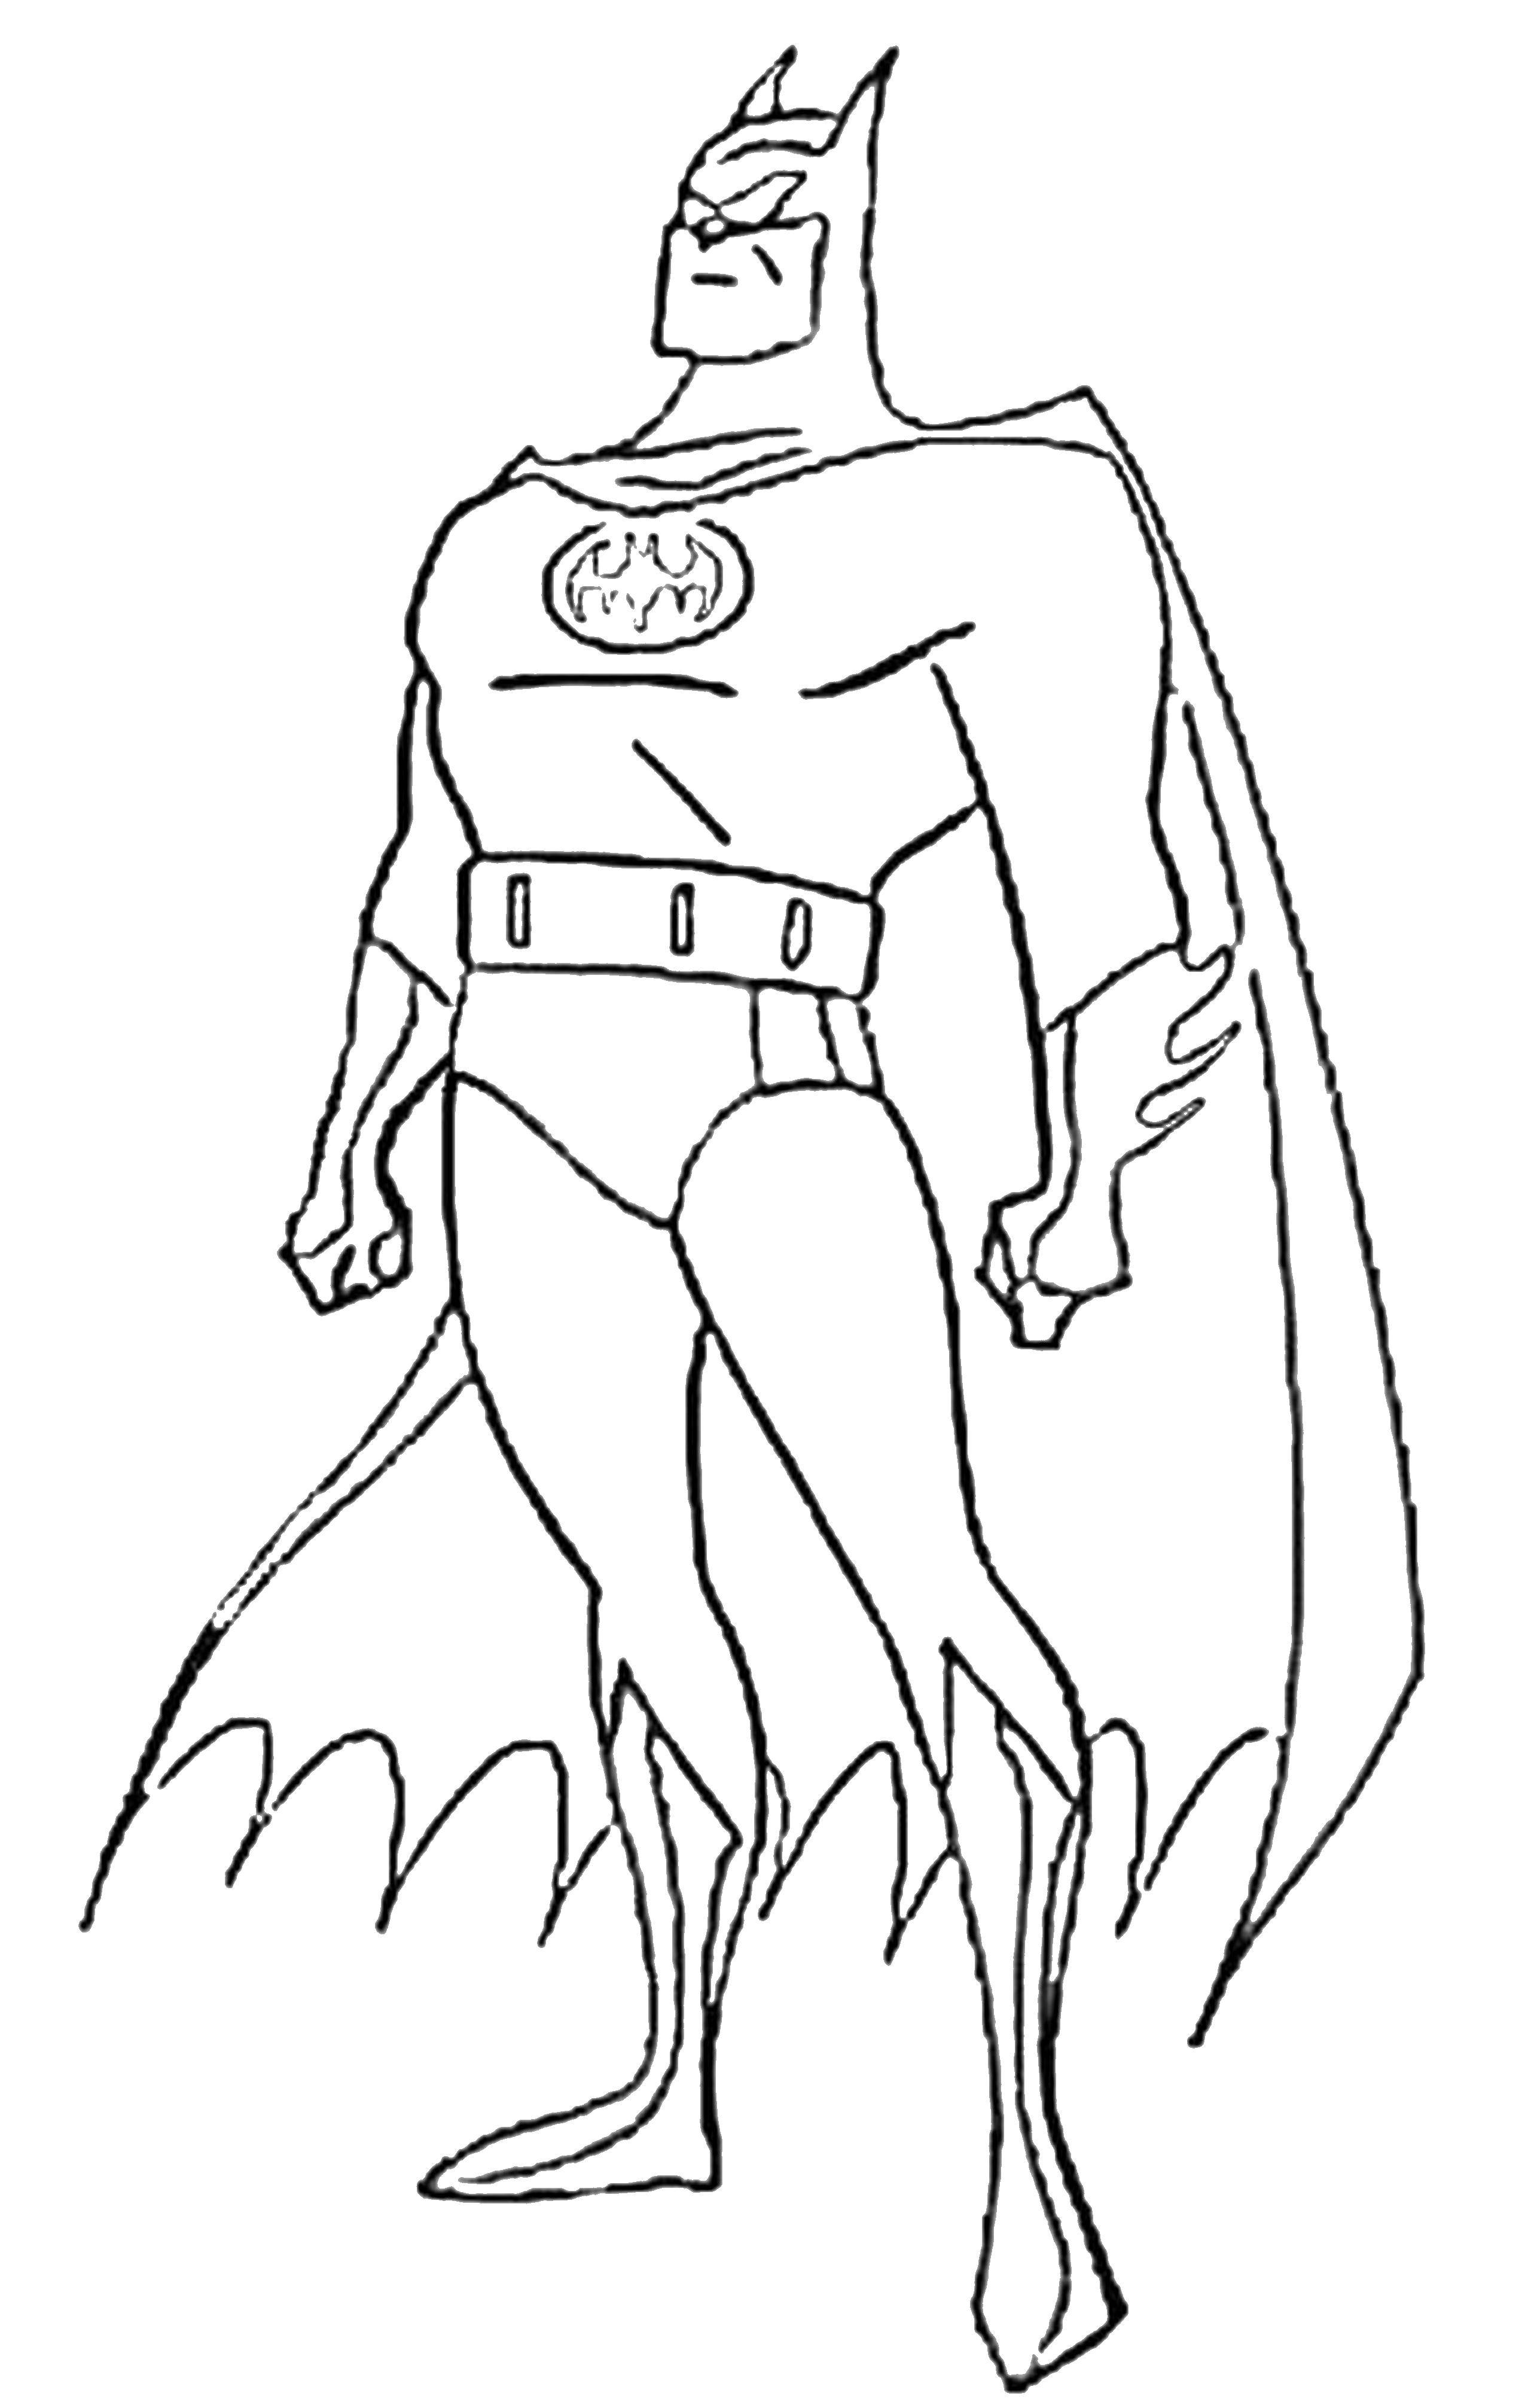 Coloring Muscular Batman. Category Batman. Tags:  superheroes, Batman, comics.